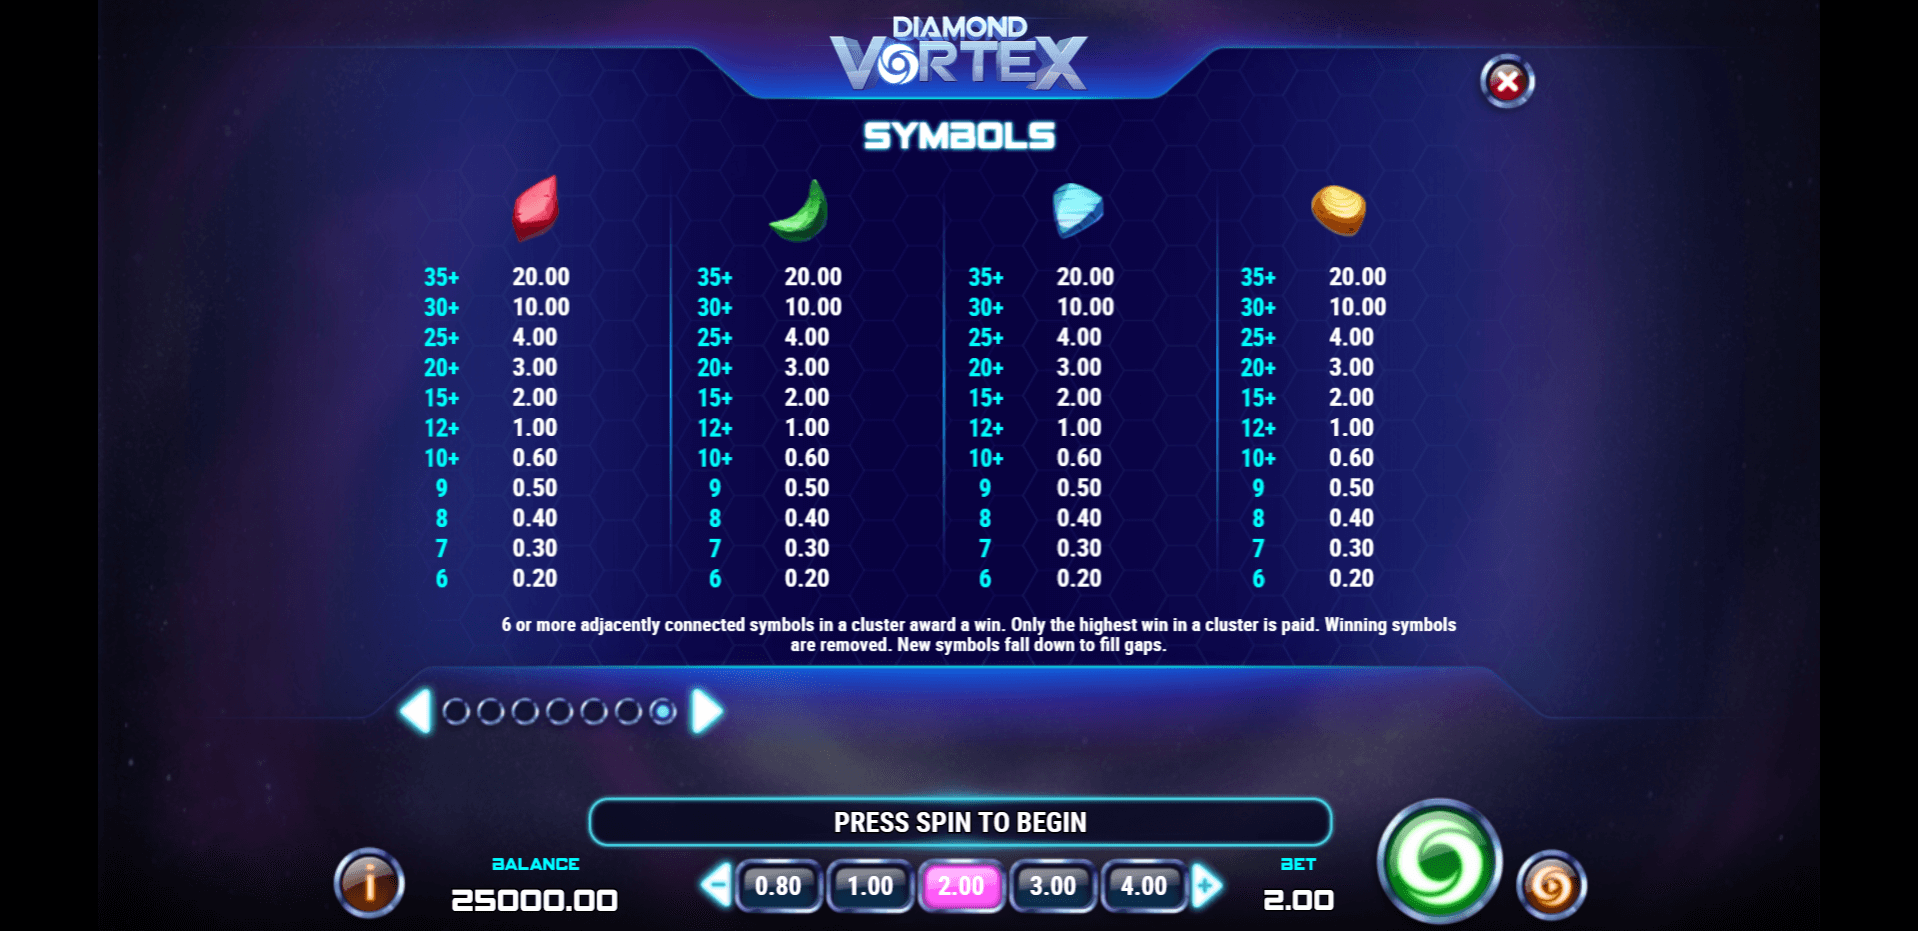 diamond vortex slot machine detail image 6